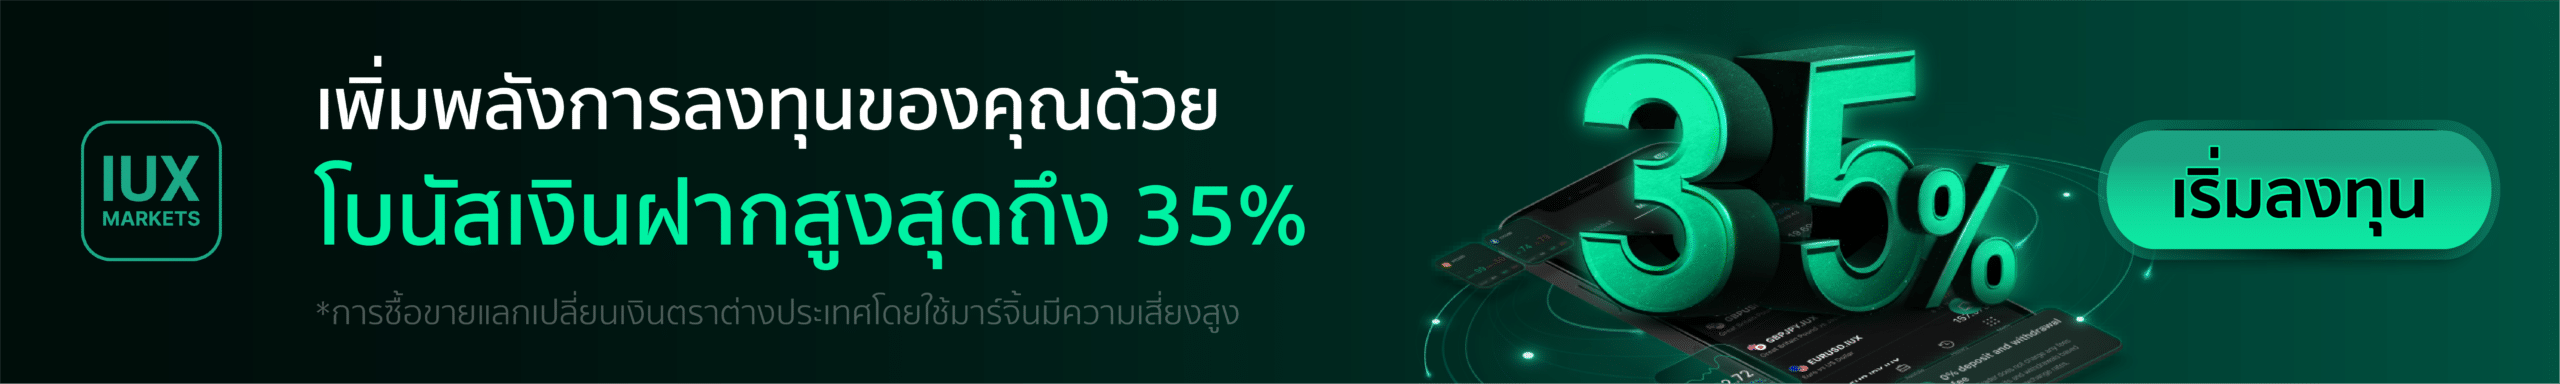 iux markets 35%